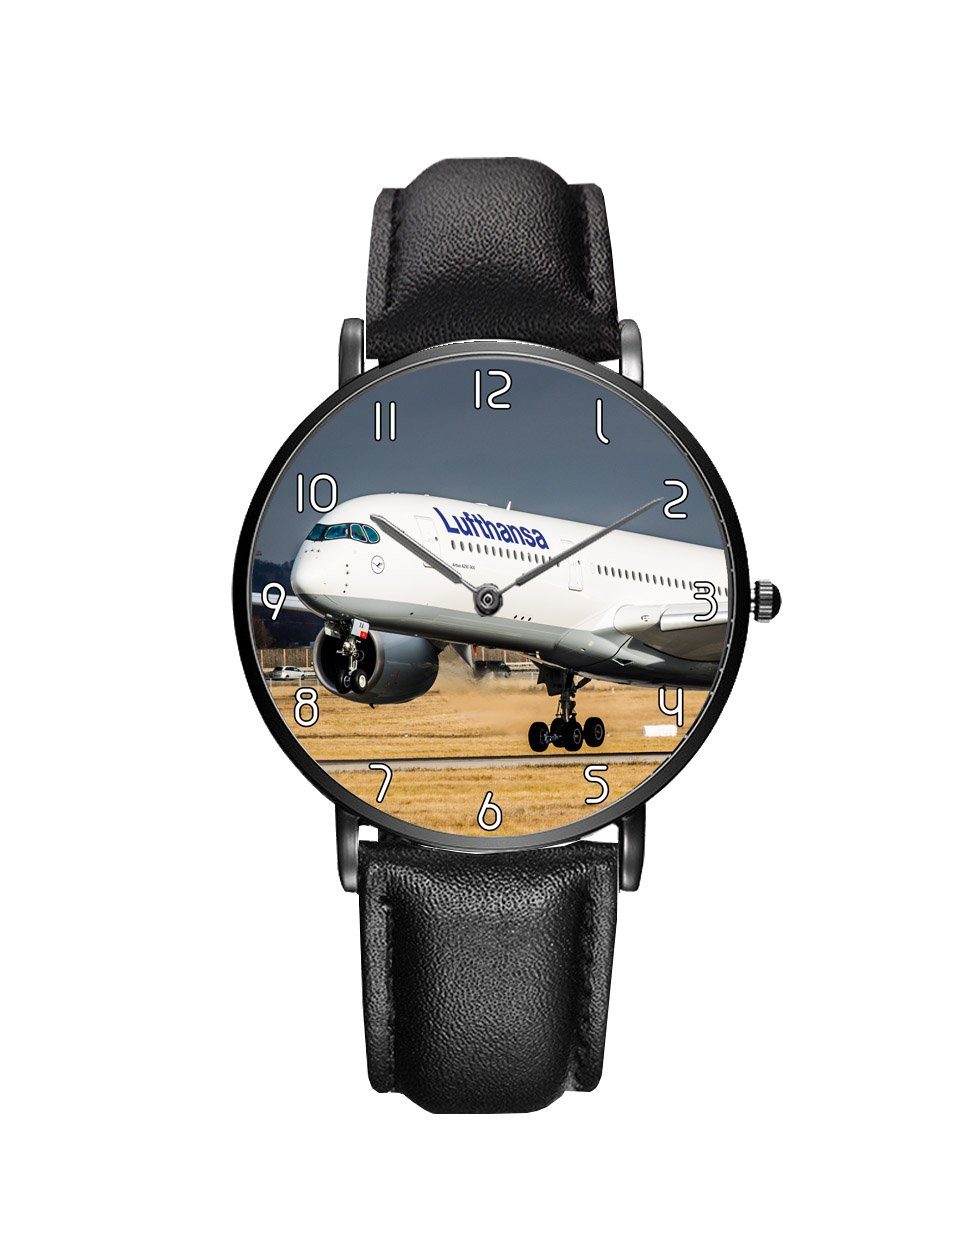 Lutfhansa A350 Printed Leather Strap Watches Aviation Shop Black & Black Leather Strap 